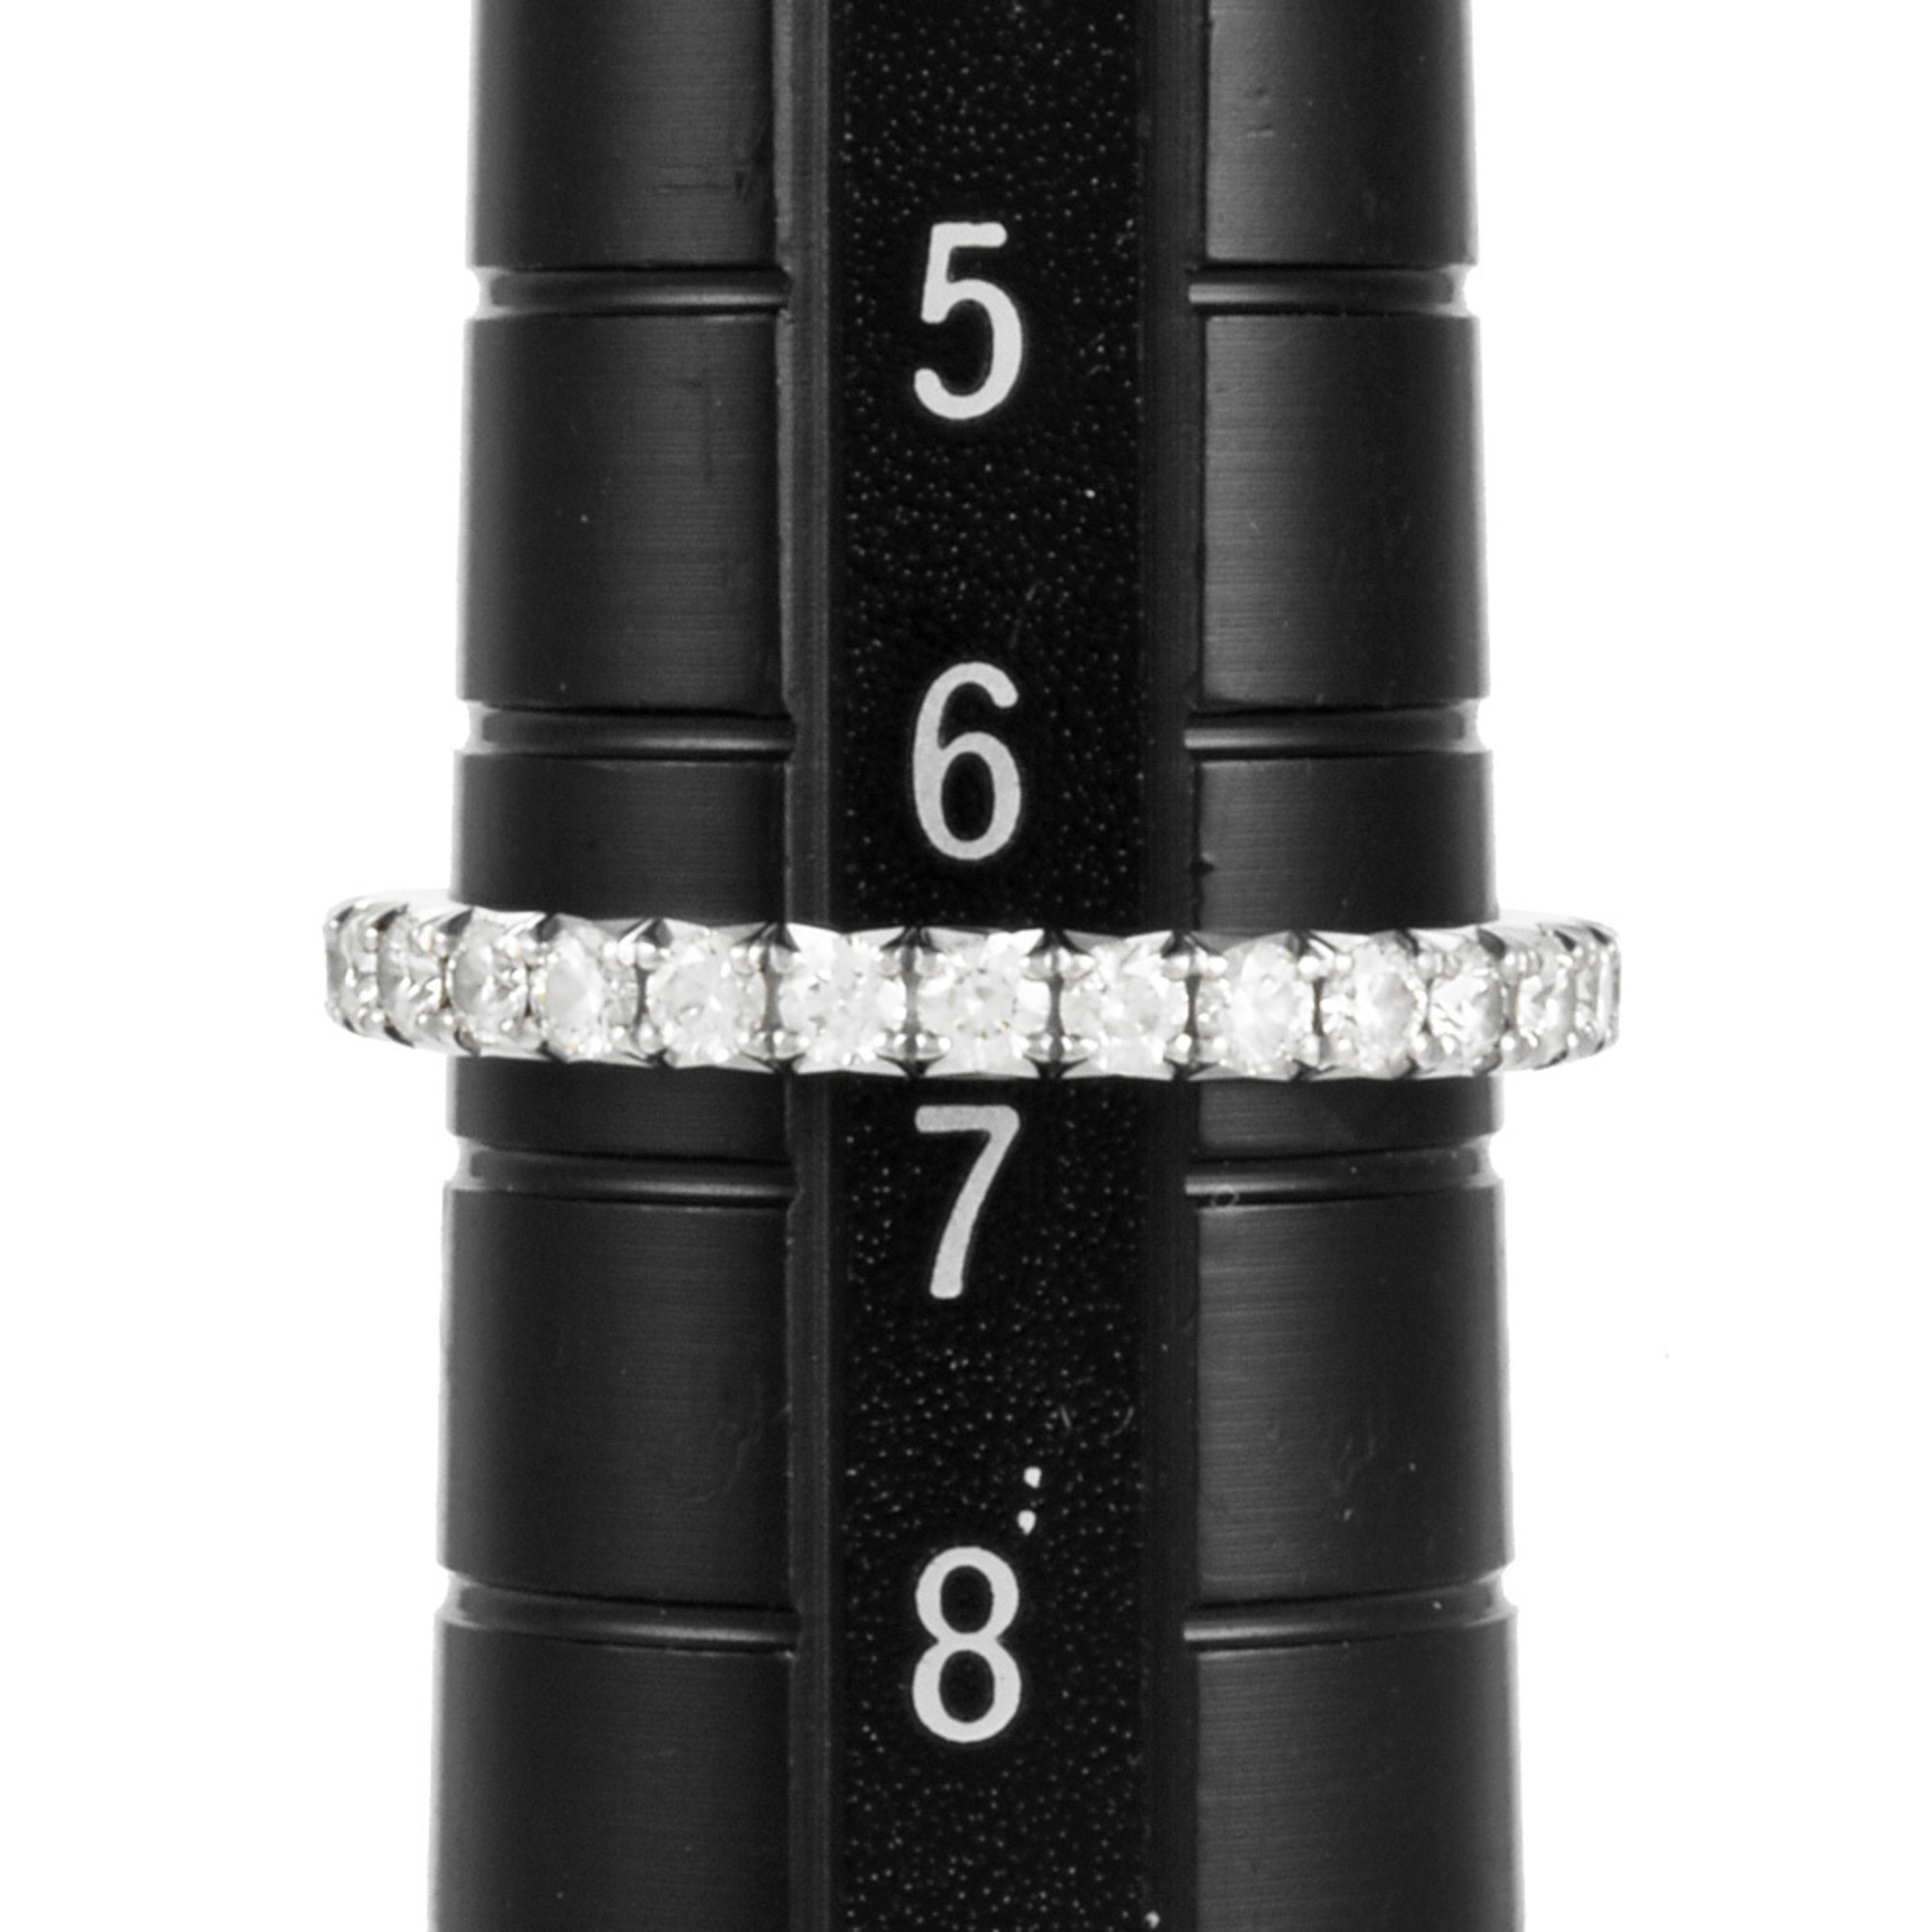 Harry Winston Brilliant Love Band Ring, Diamond, Size 6.5, Pt950, 2.2g, Eternity Women's